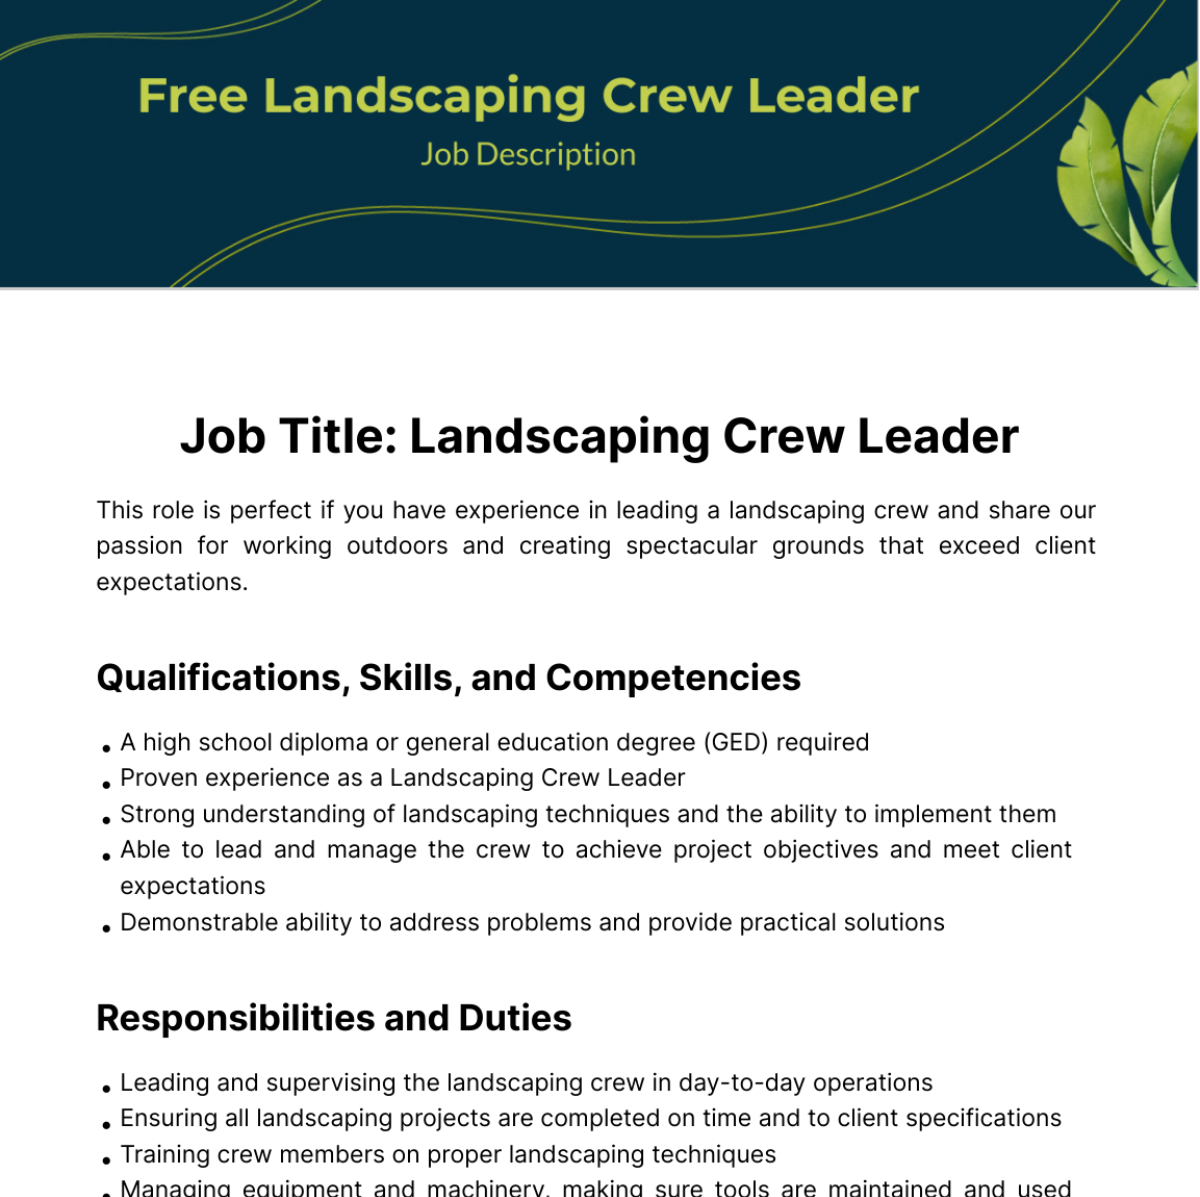 Free Landscaping Crew Leader Job Description Template